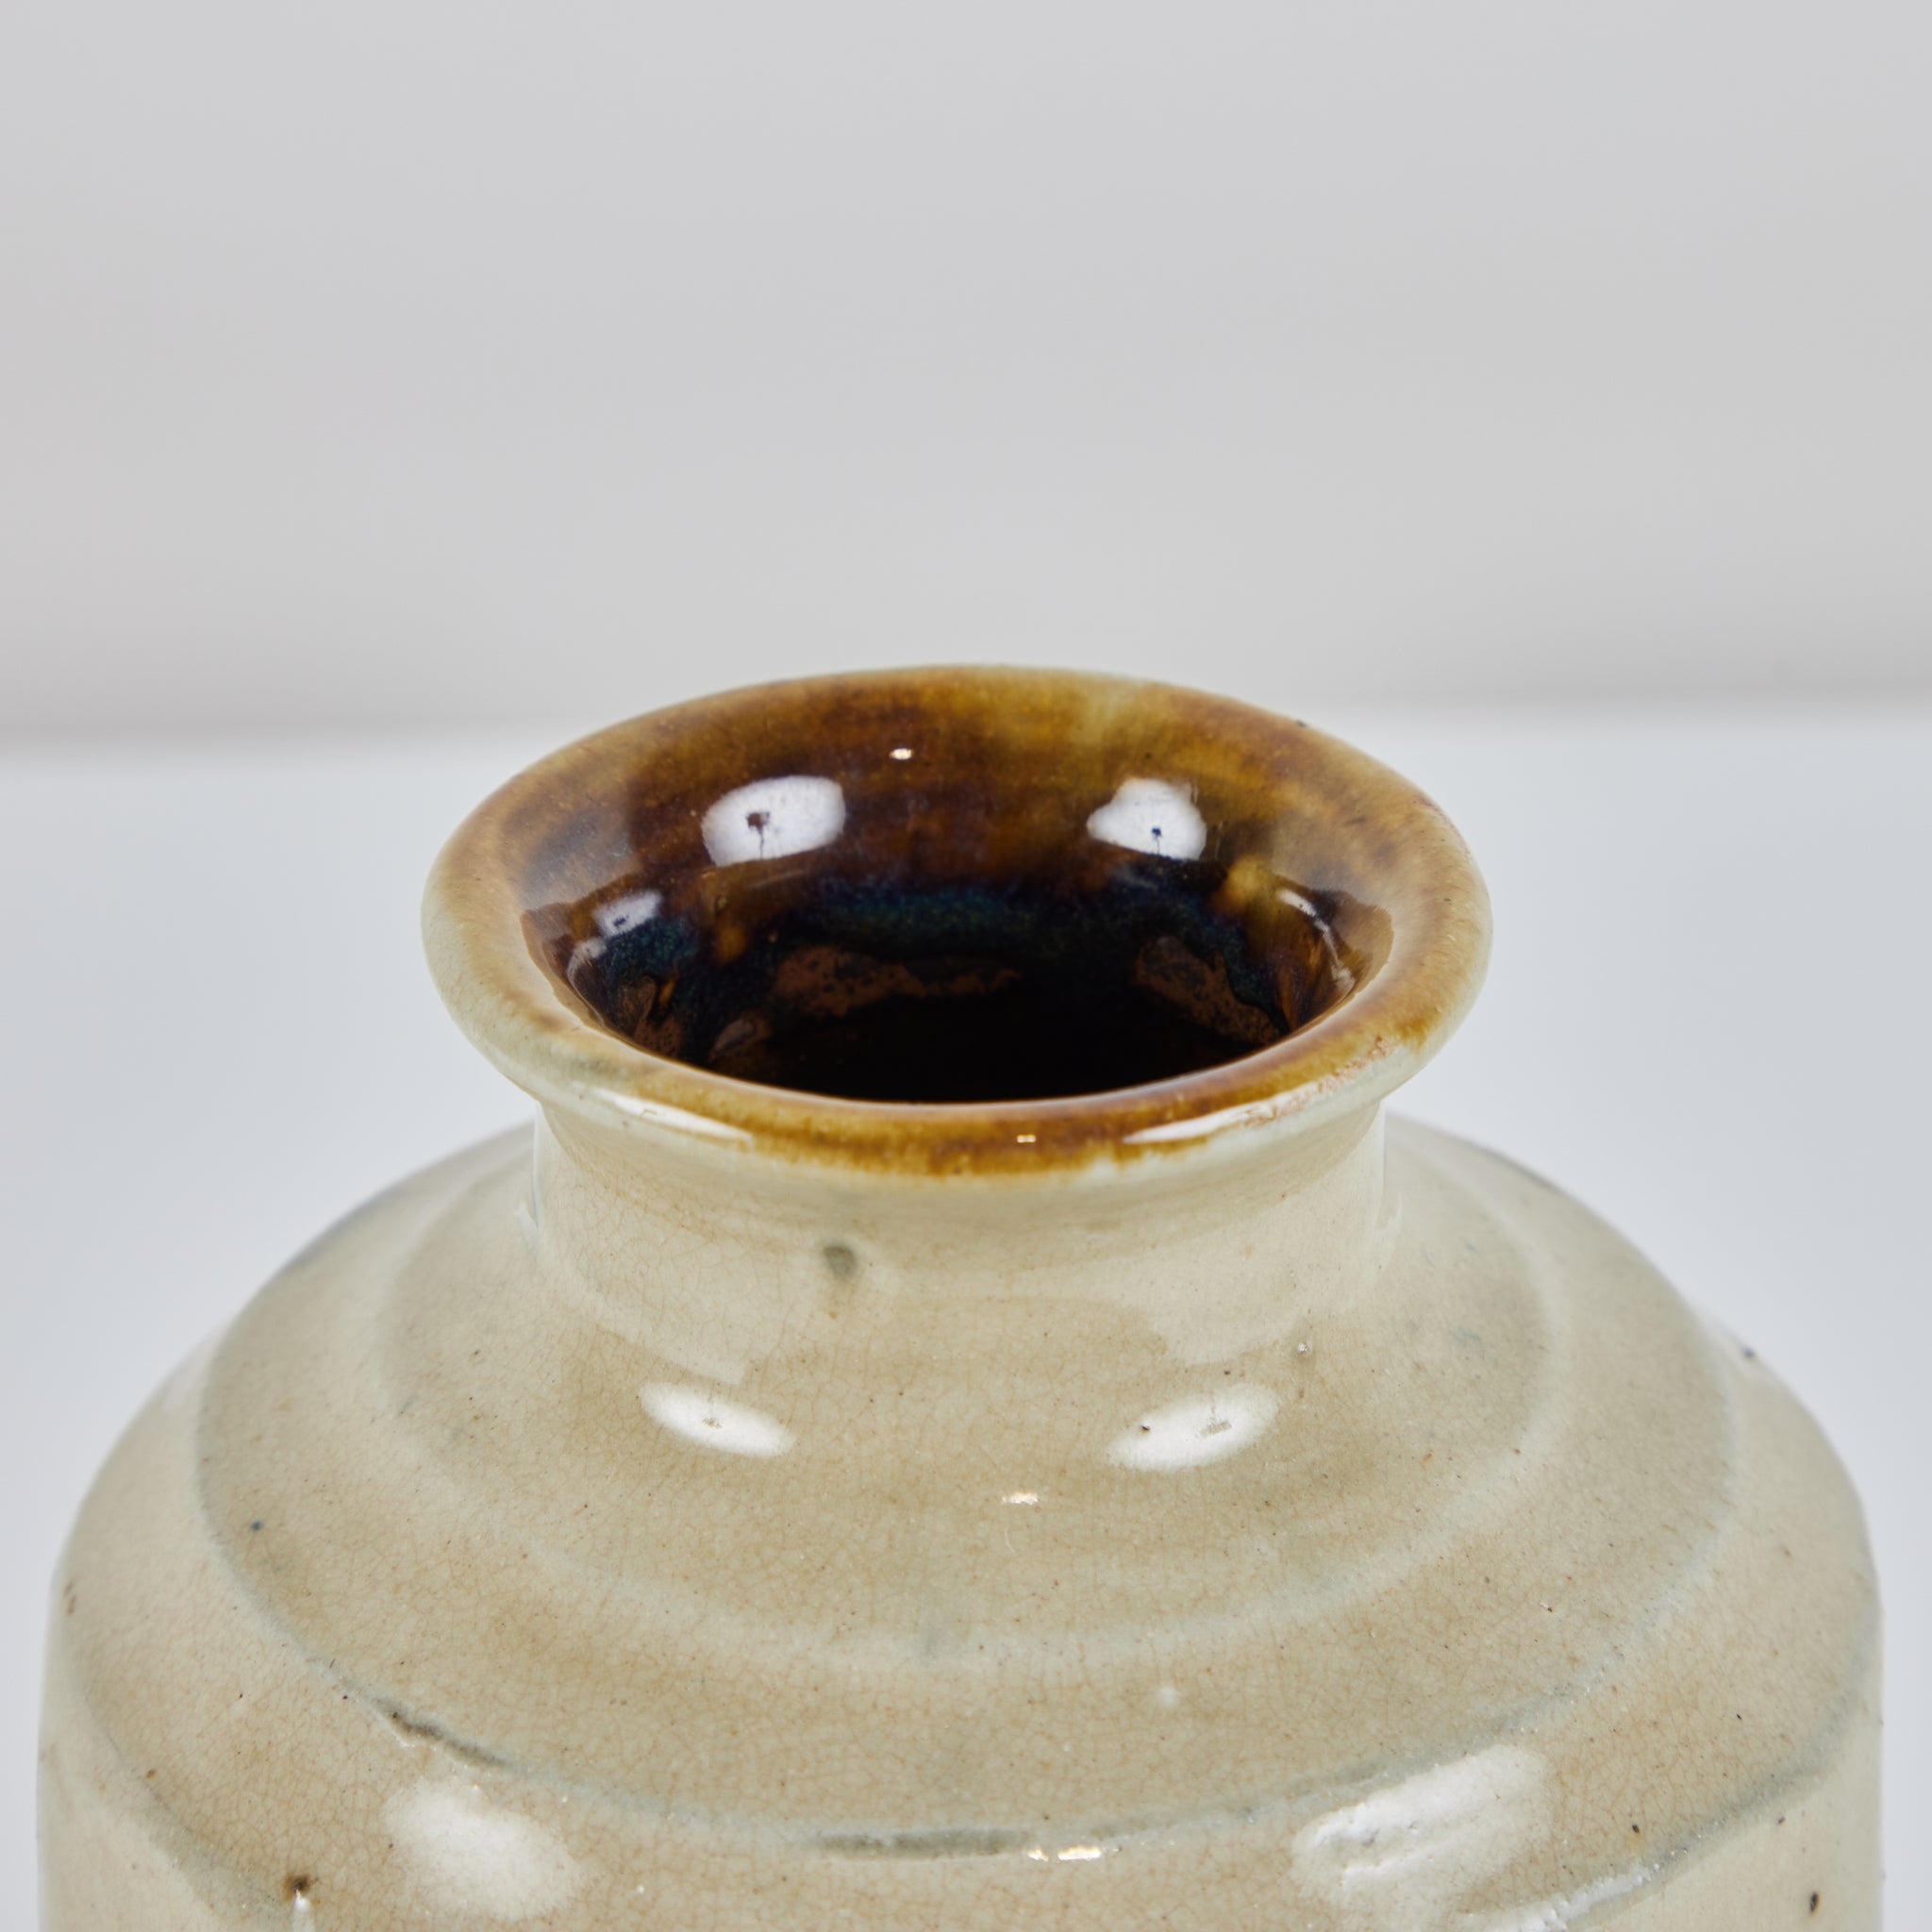 Japanese Ceramic Glazed Vase